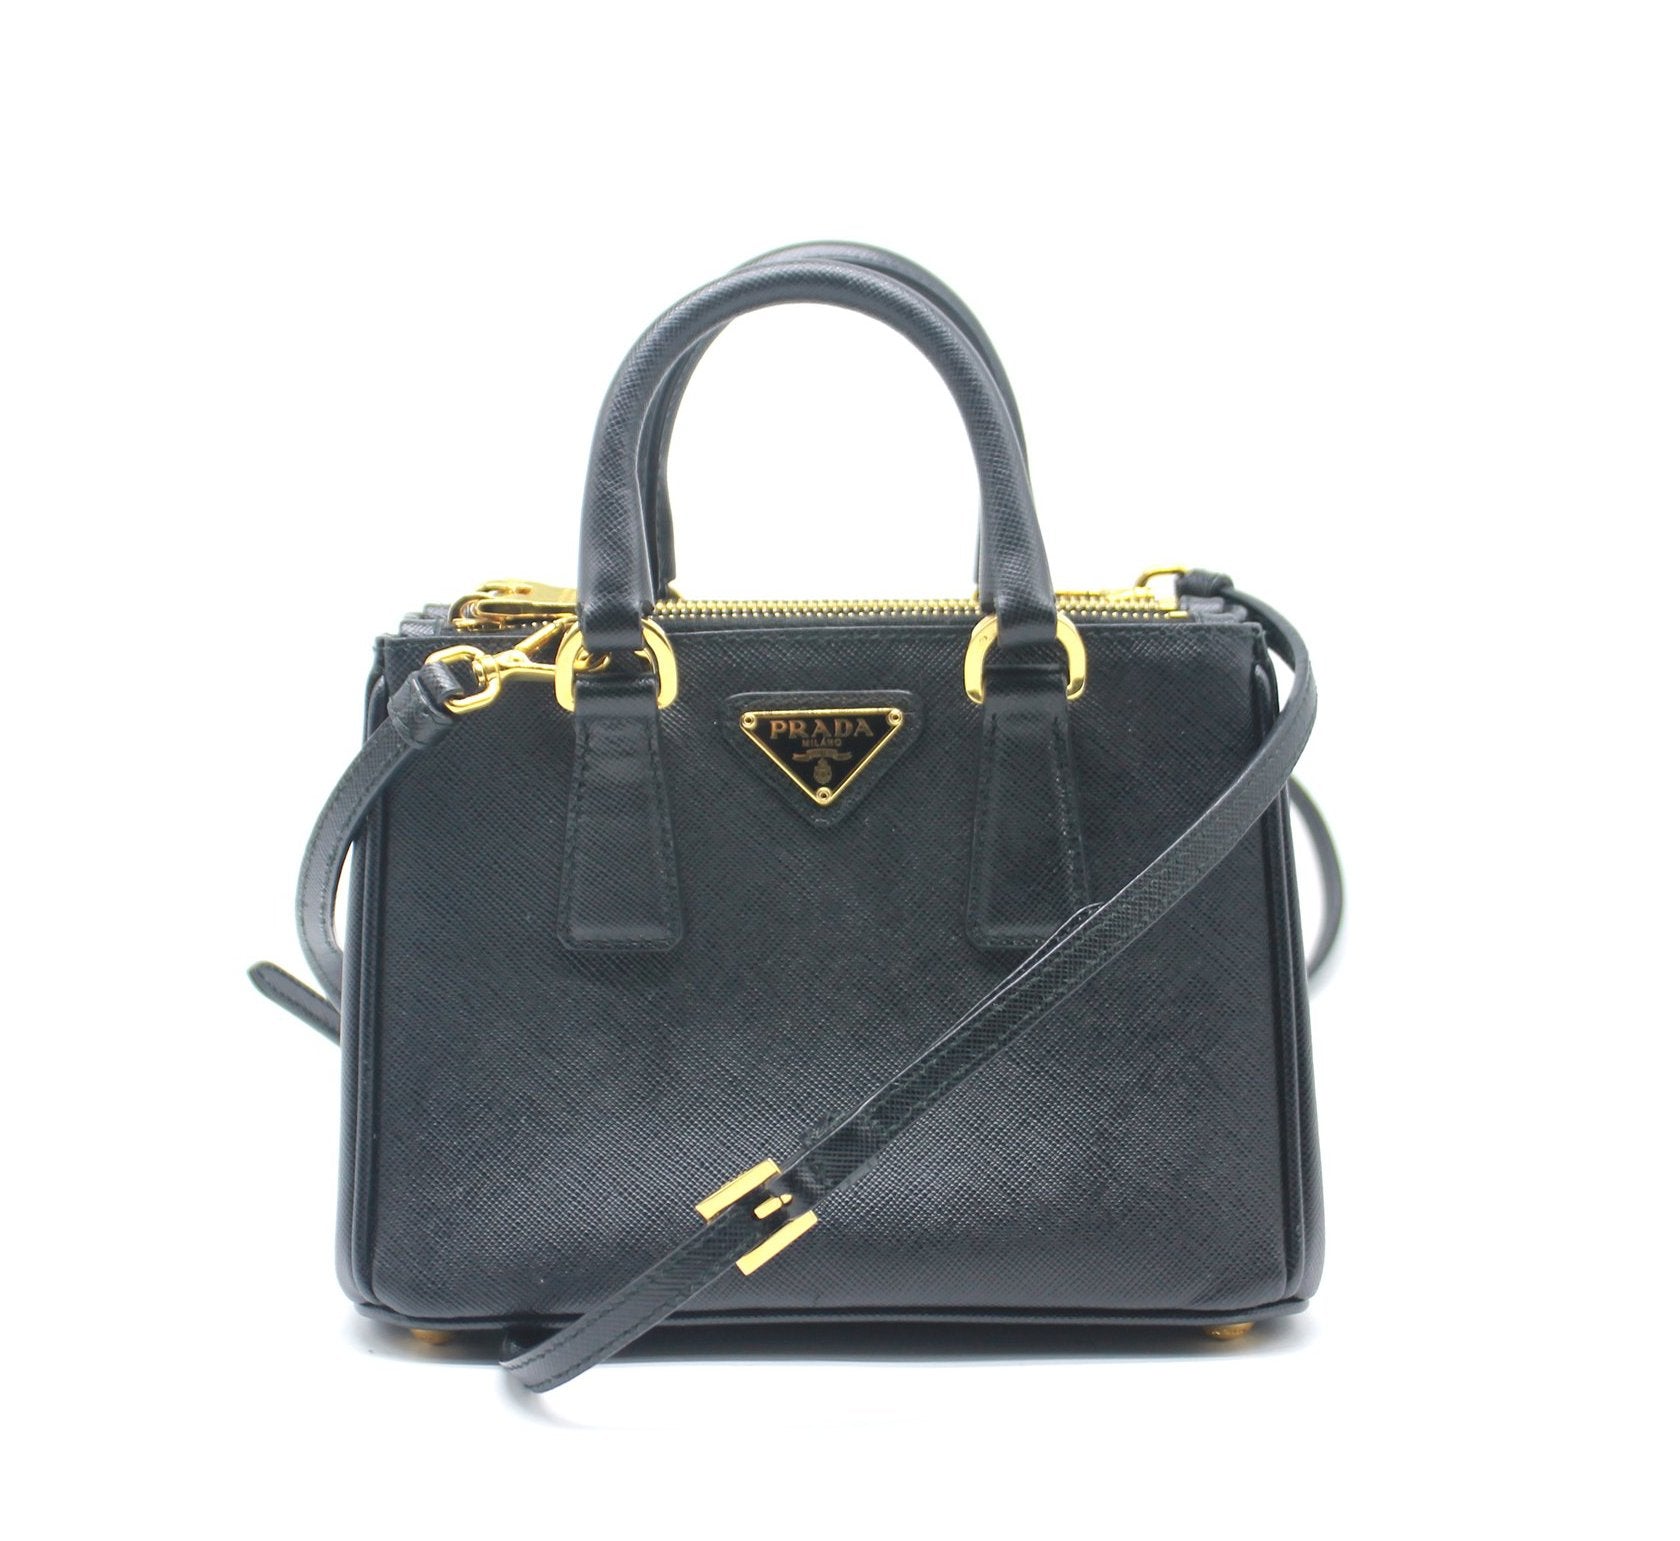 Prada Galleria Saffiano Mini leather shoulder bag